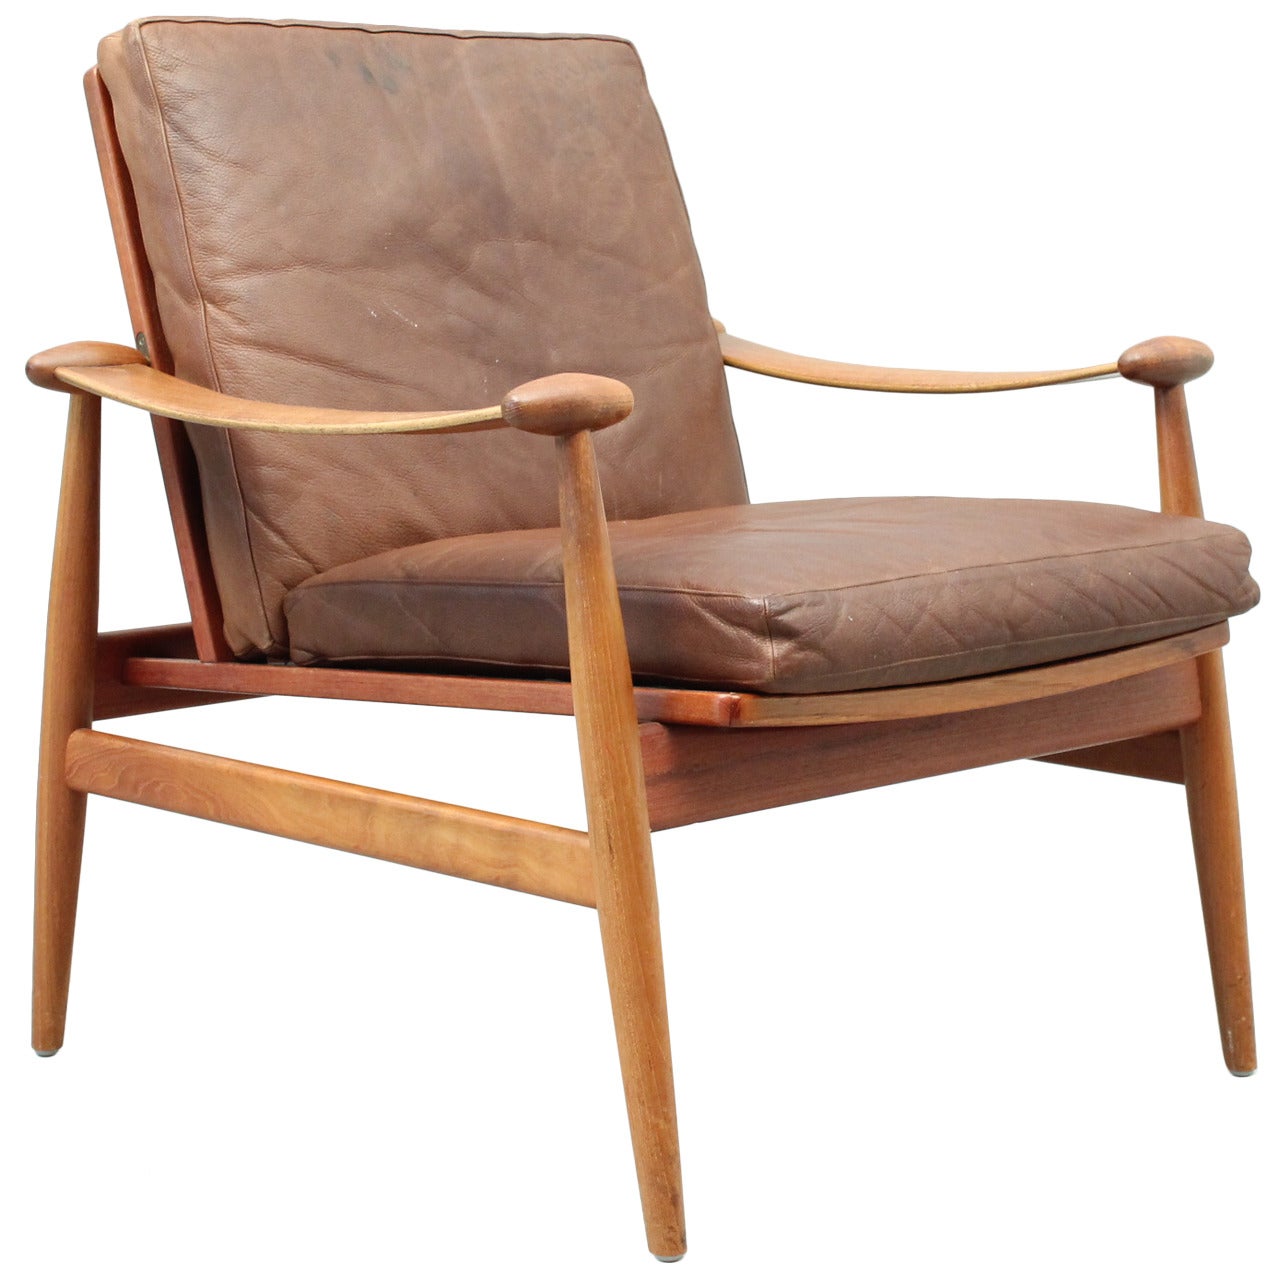 Finn Juhl Spade Chair FD133 with Brown Leather - Danish, Mid Century Modern For Sale